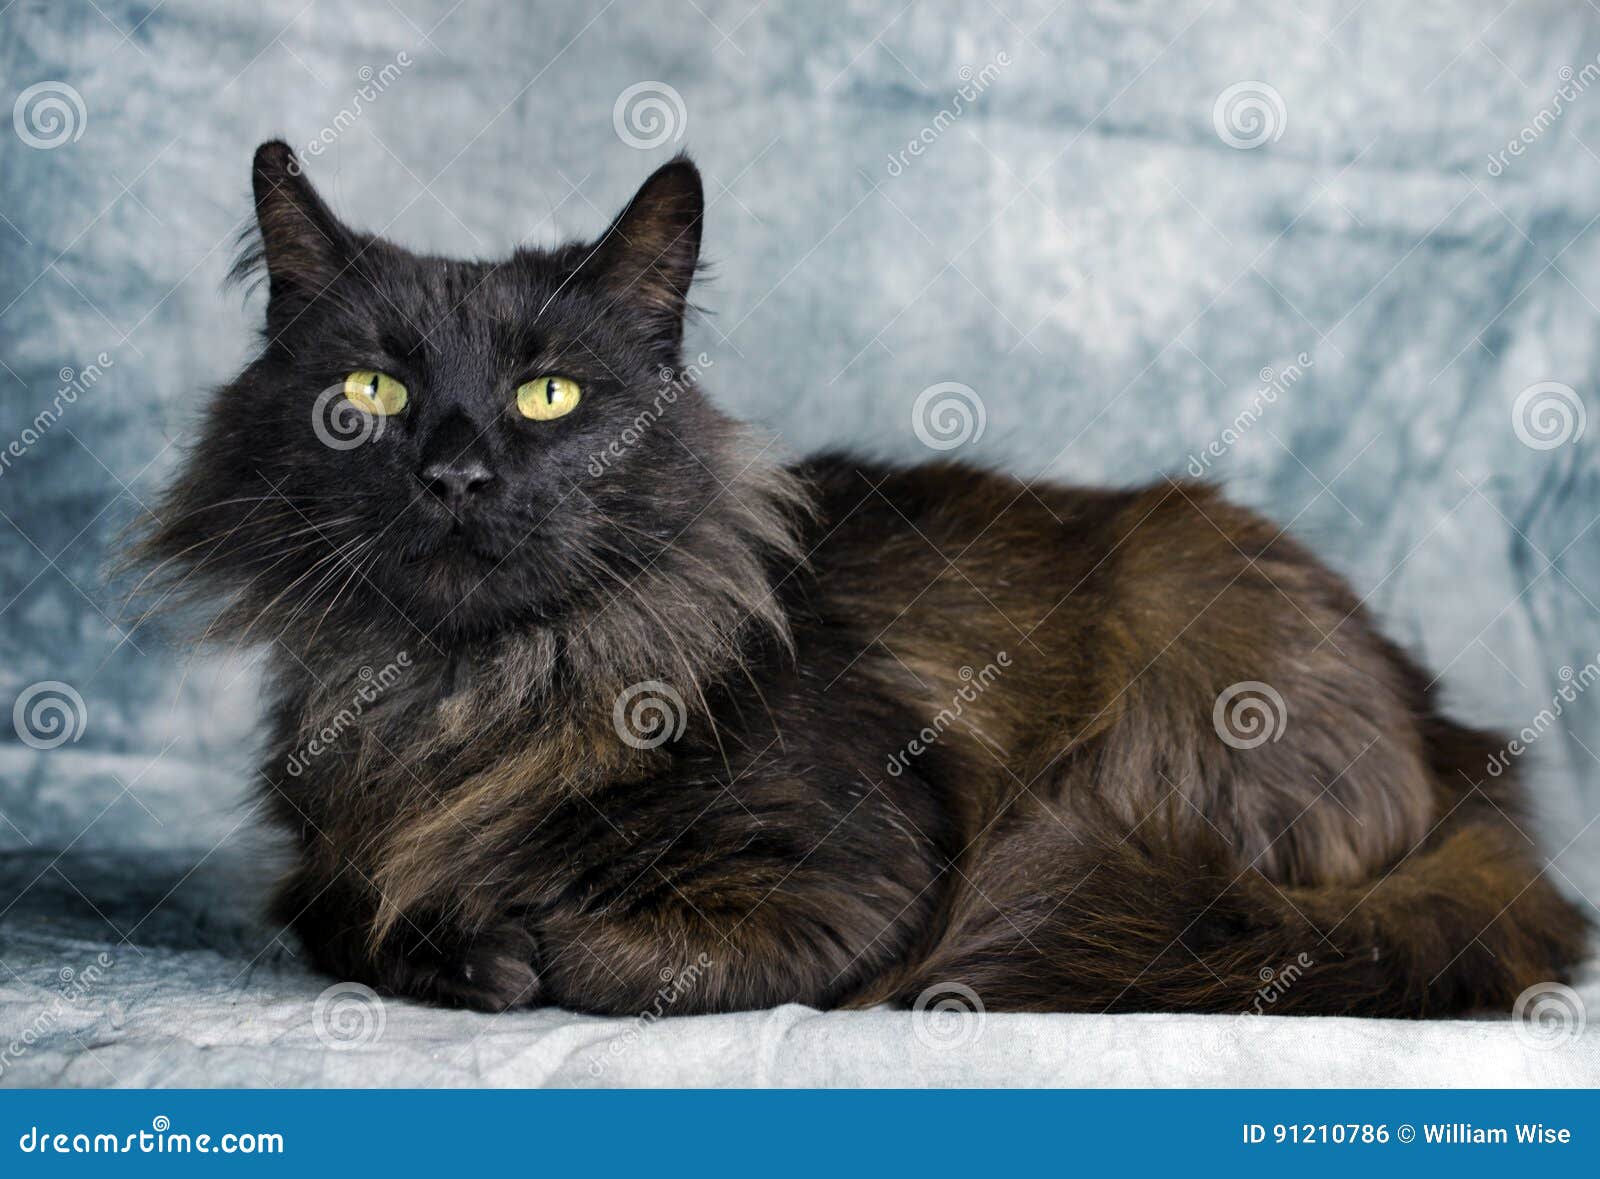 Black Domestic Long Hair Cat Stock Photo Image Of Adoption Society 91210786